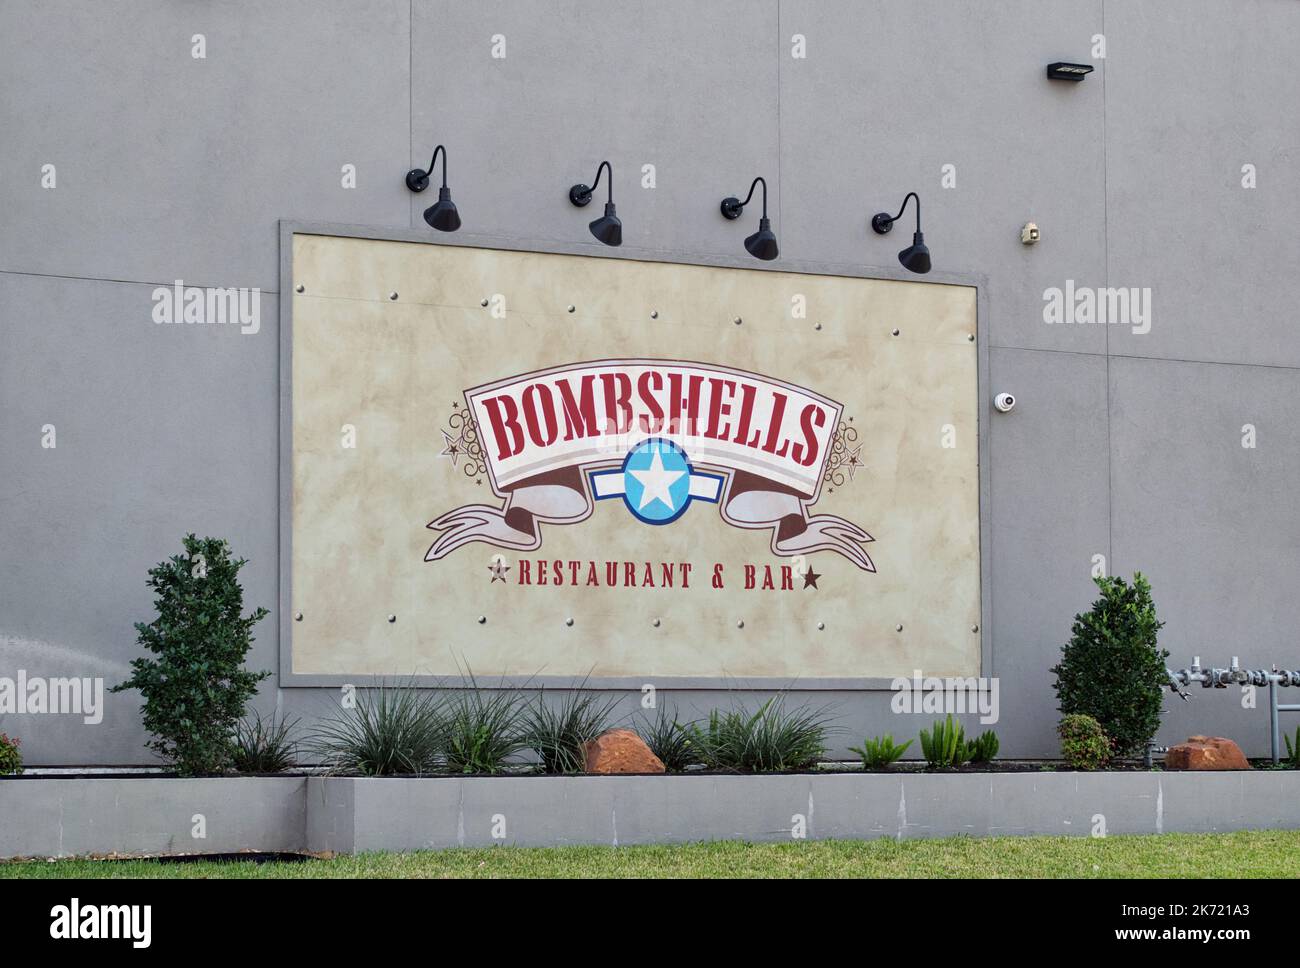 Houston, Texas USA 12-05-2021: Bombshells restaurant and bar sign on an exterior wall in Houston, TX. Military themed hospitality establishment. Stock Photo